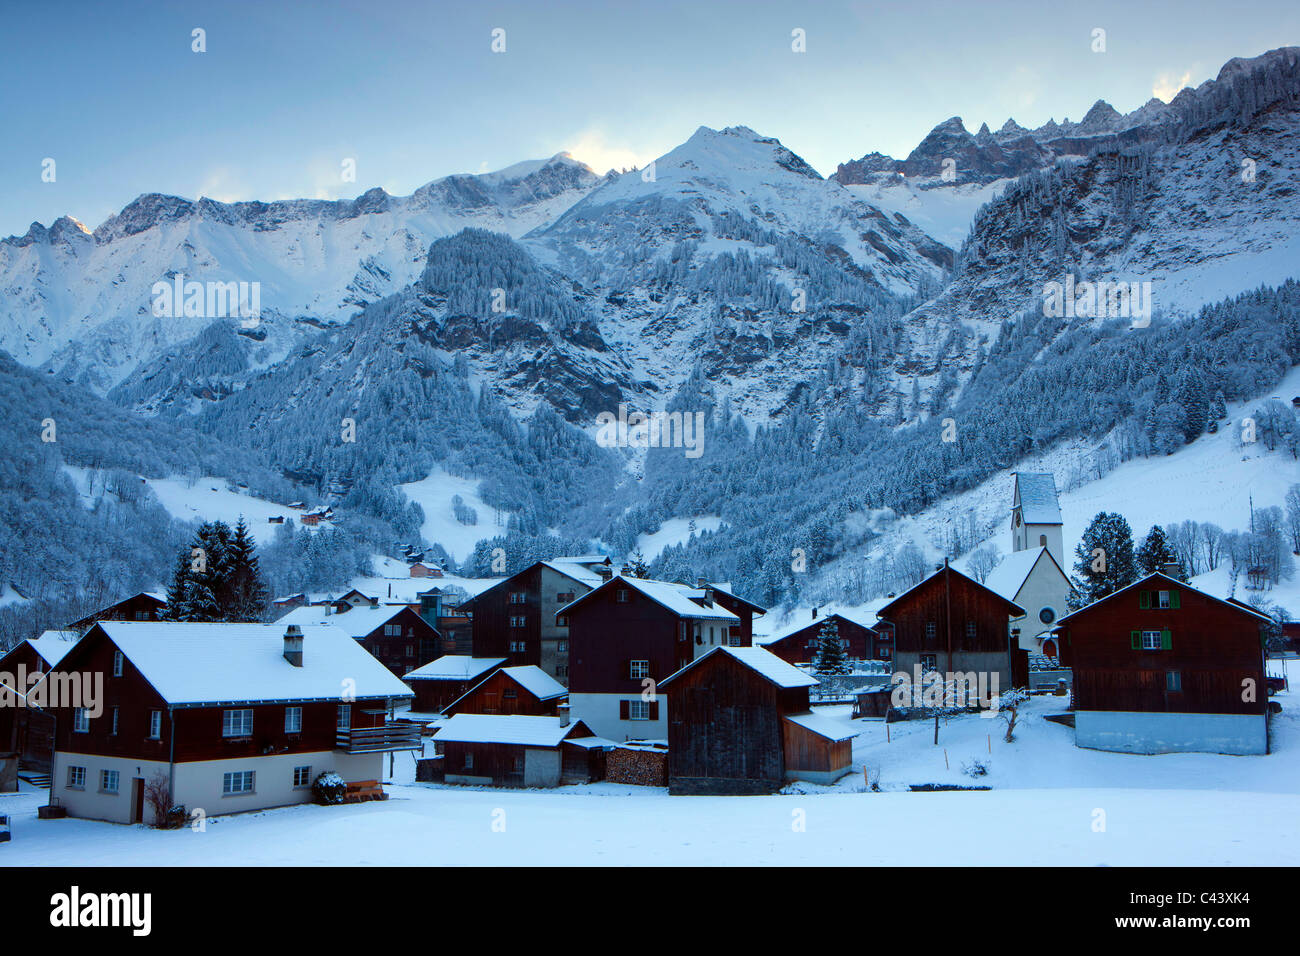 Elm, Switzerland, Europe, canton Glarus, village, houses, homes, church, winter, snow, mountains Stock Photo